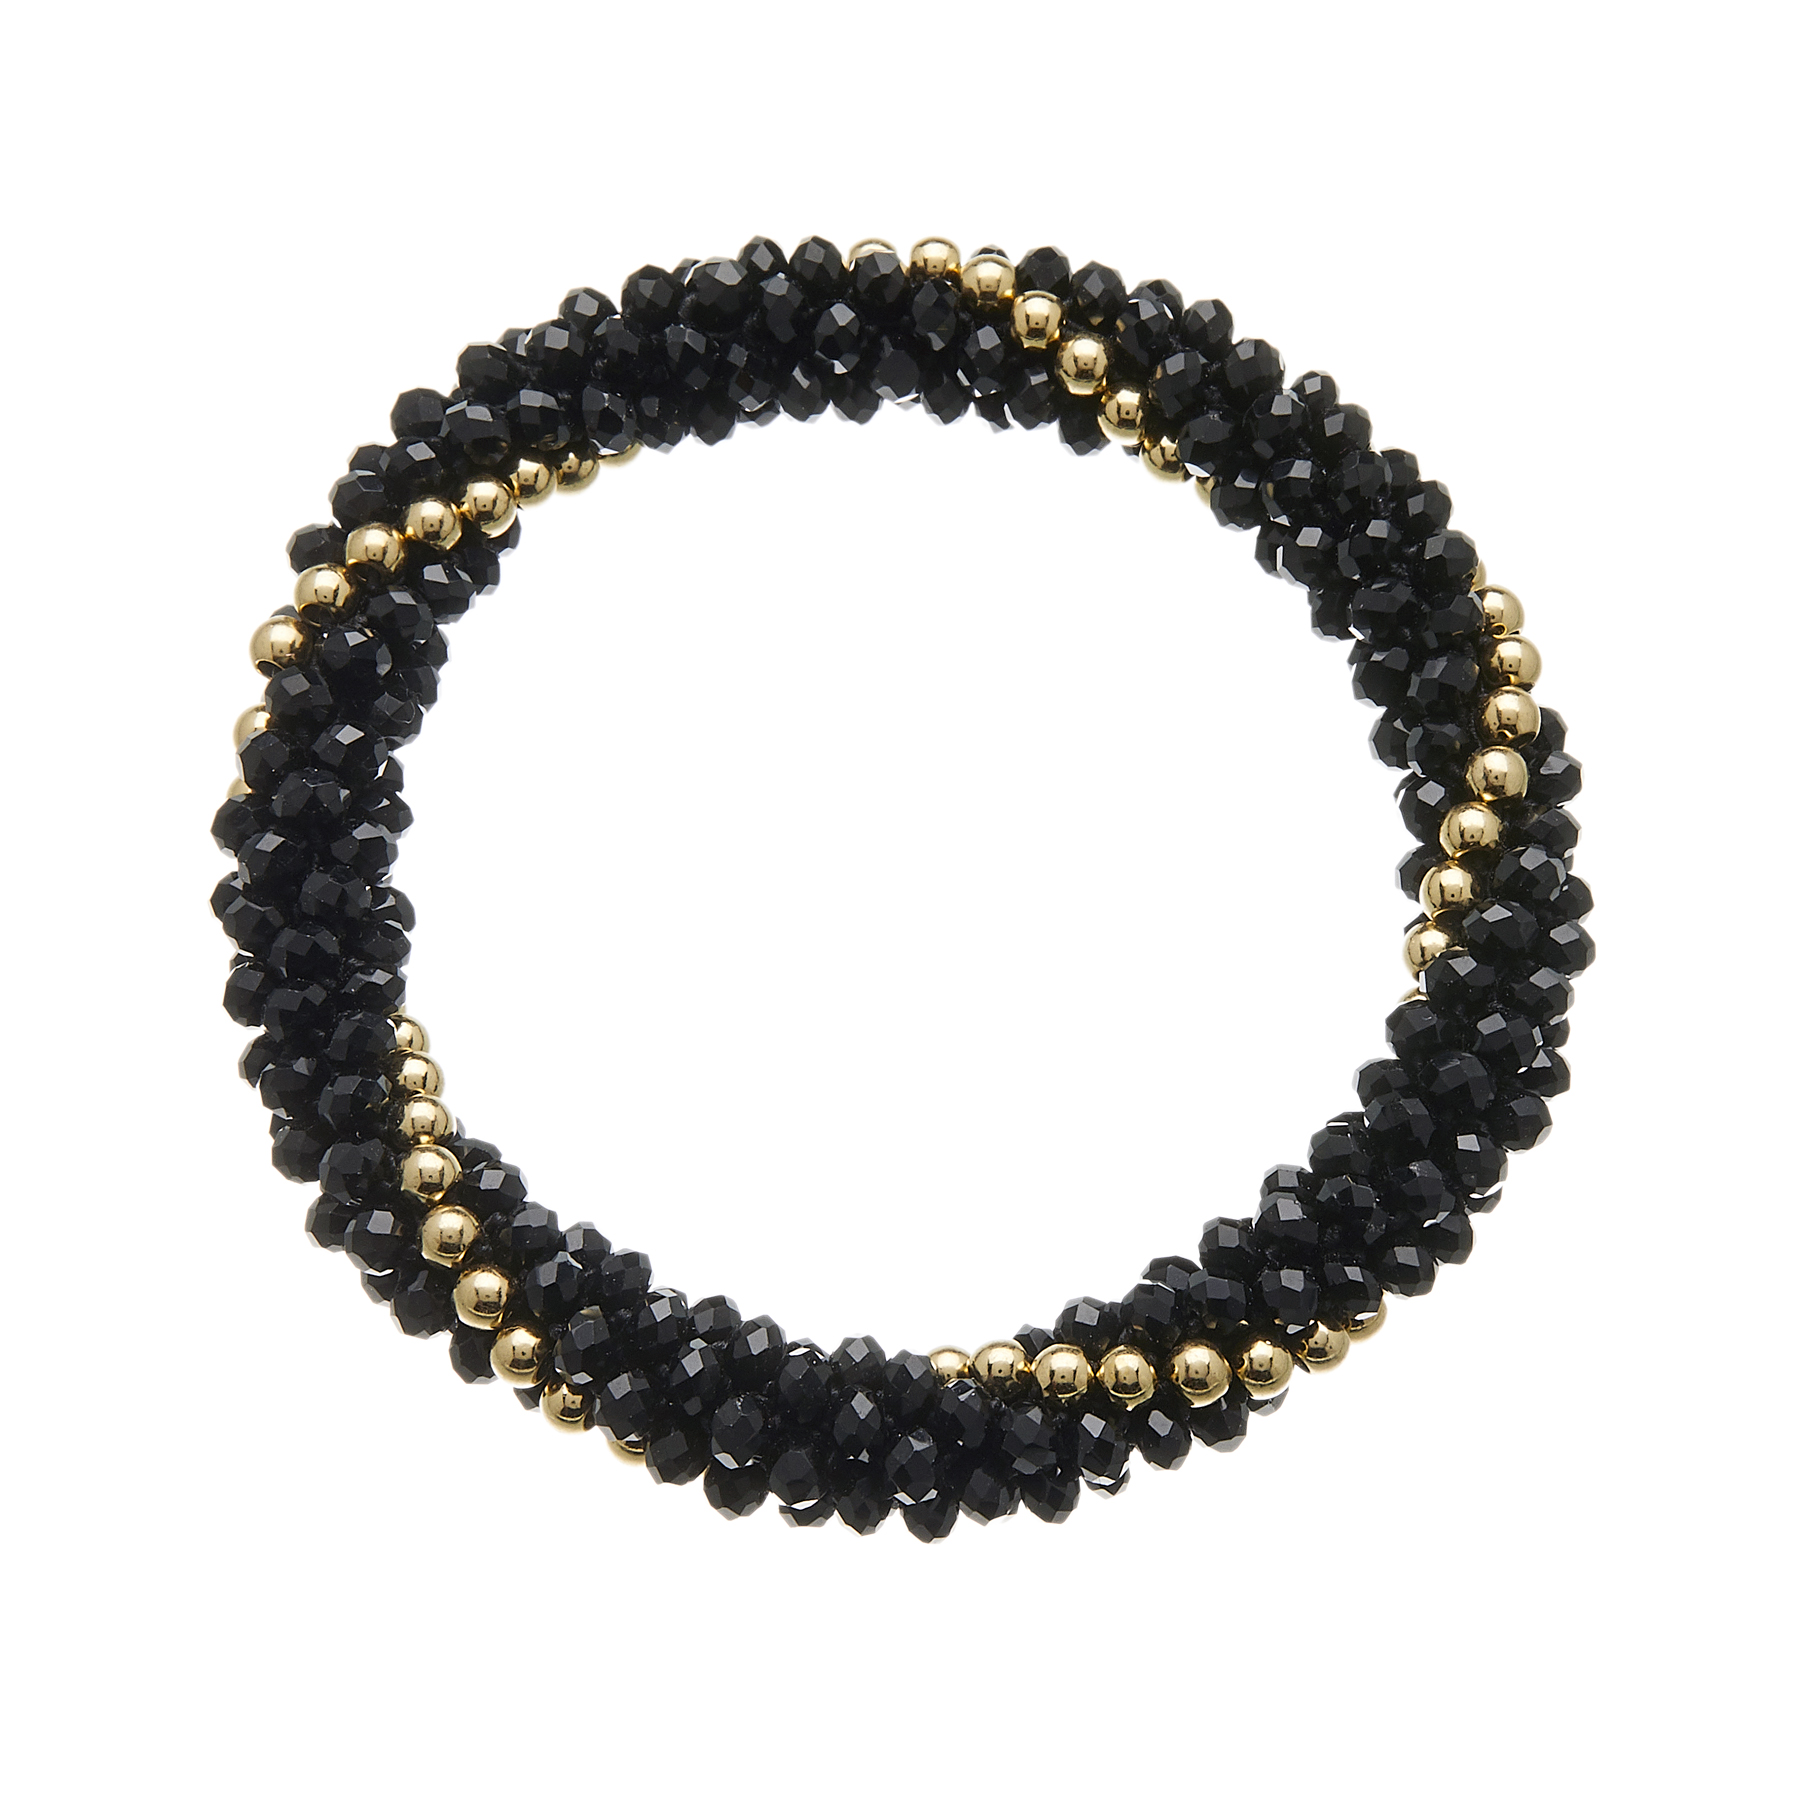 Black glass rondelle Bracelet with gold beads - Rae B11